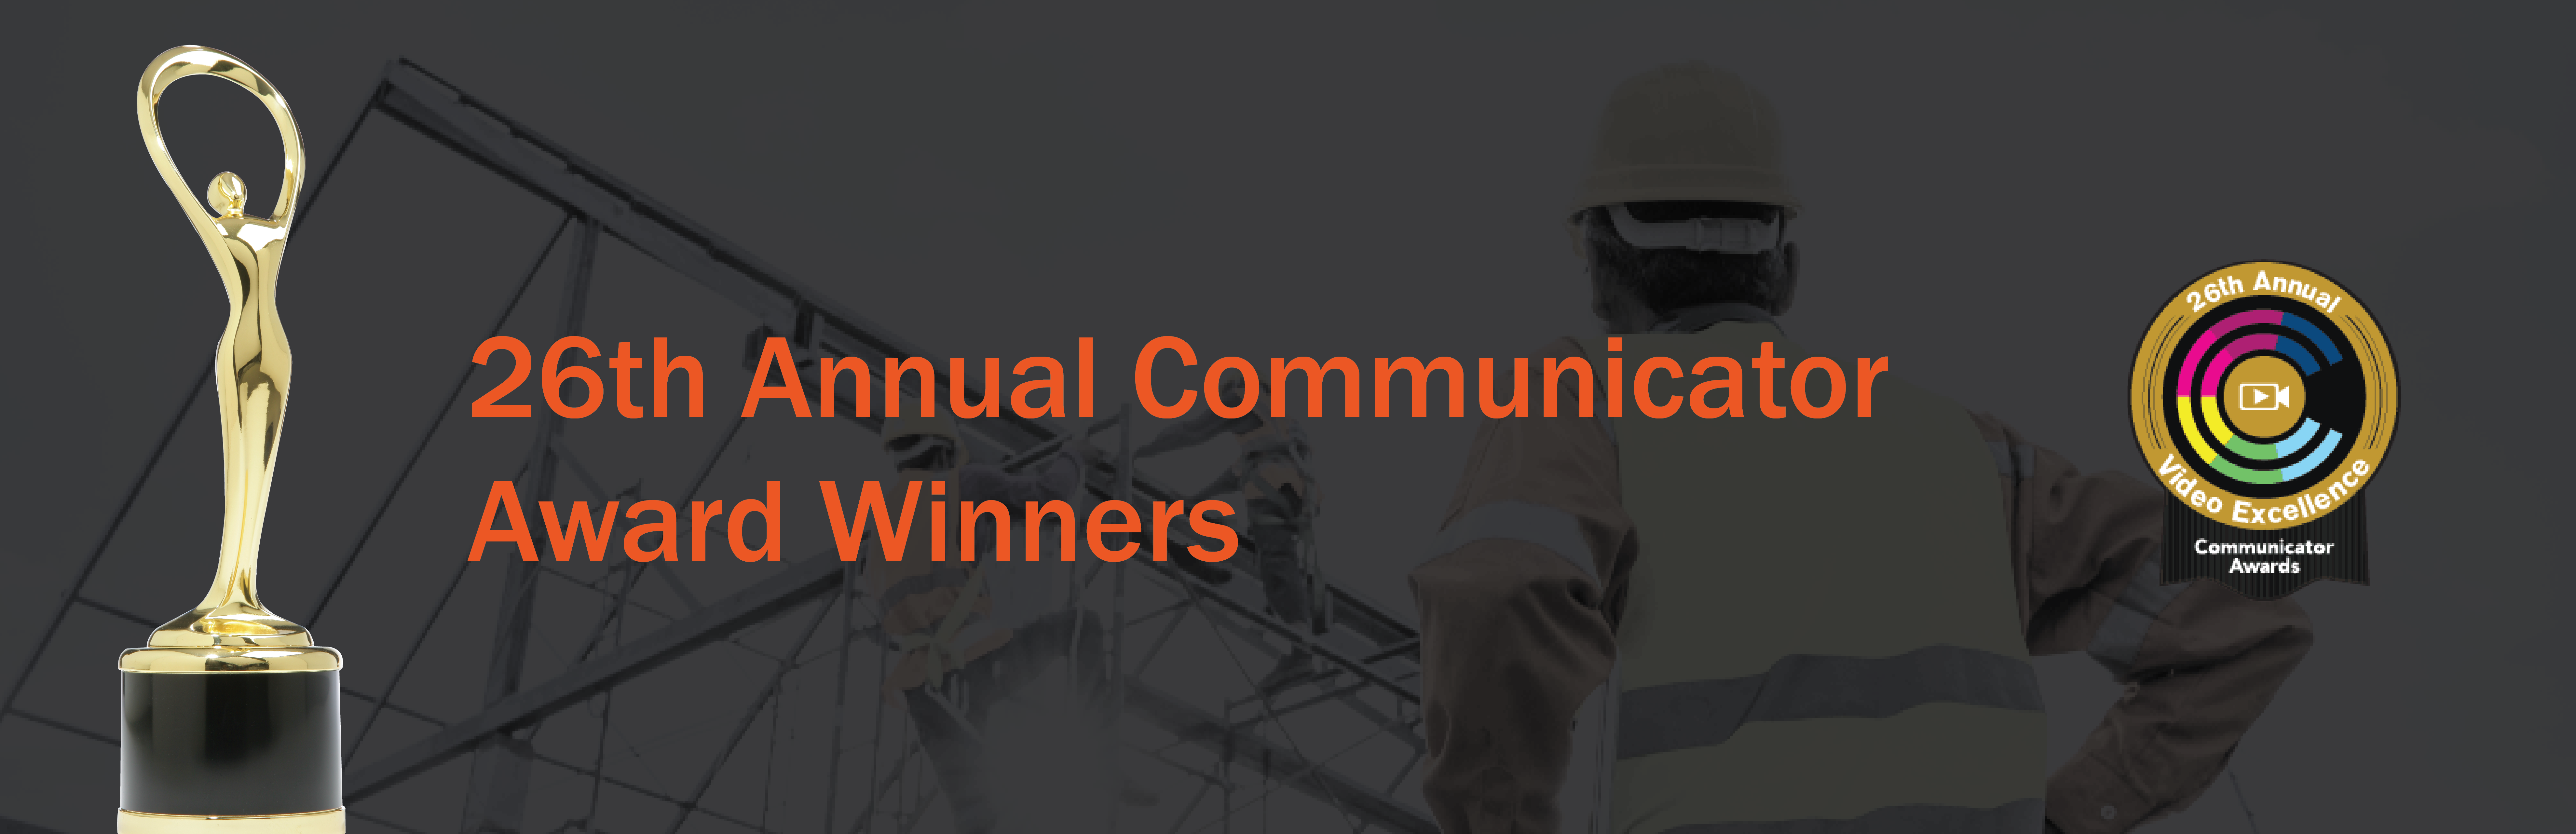 26th Annual Communicator Award Winner